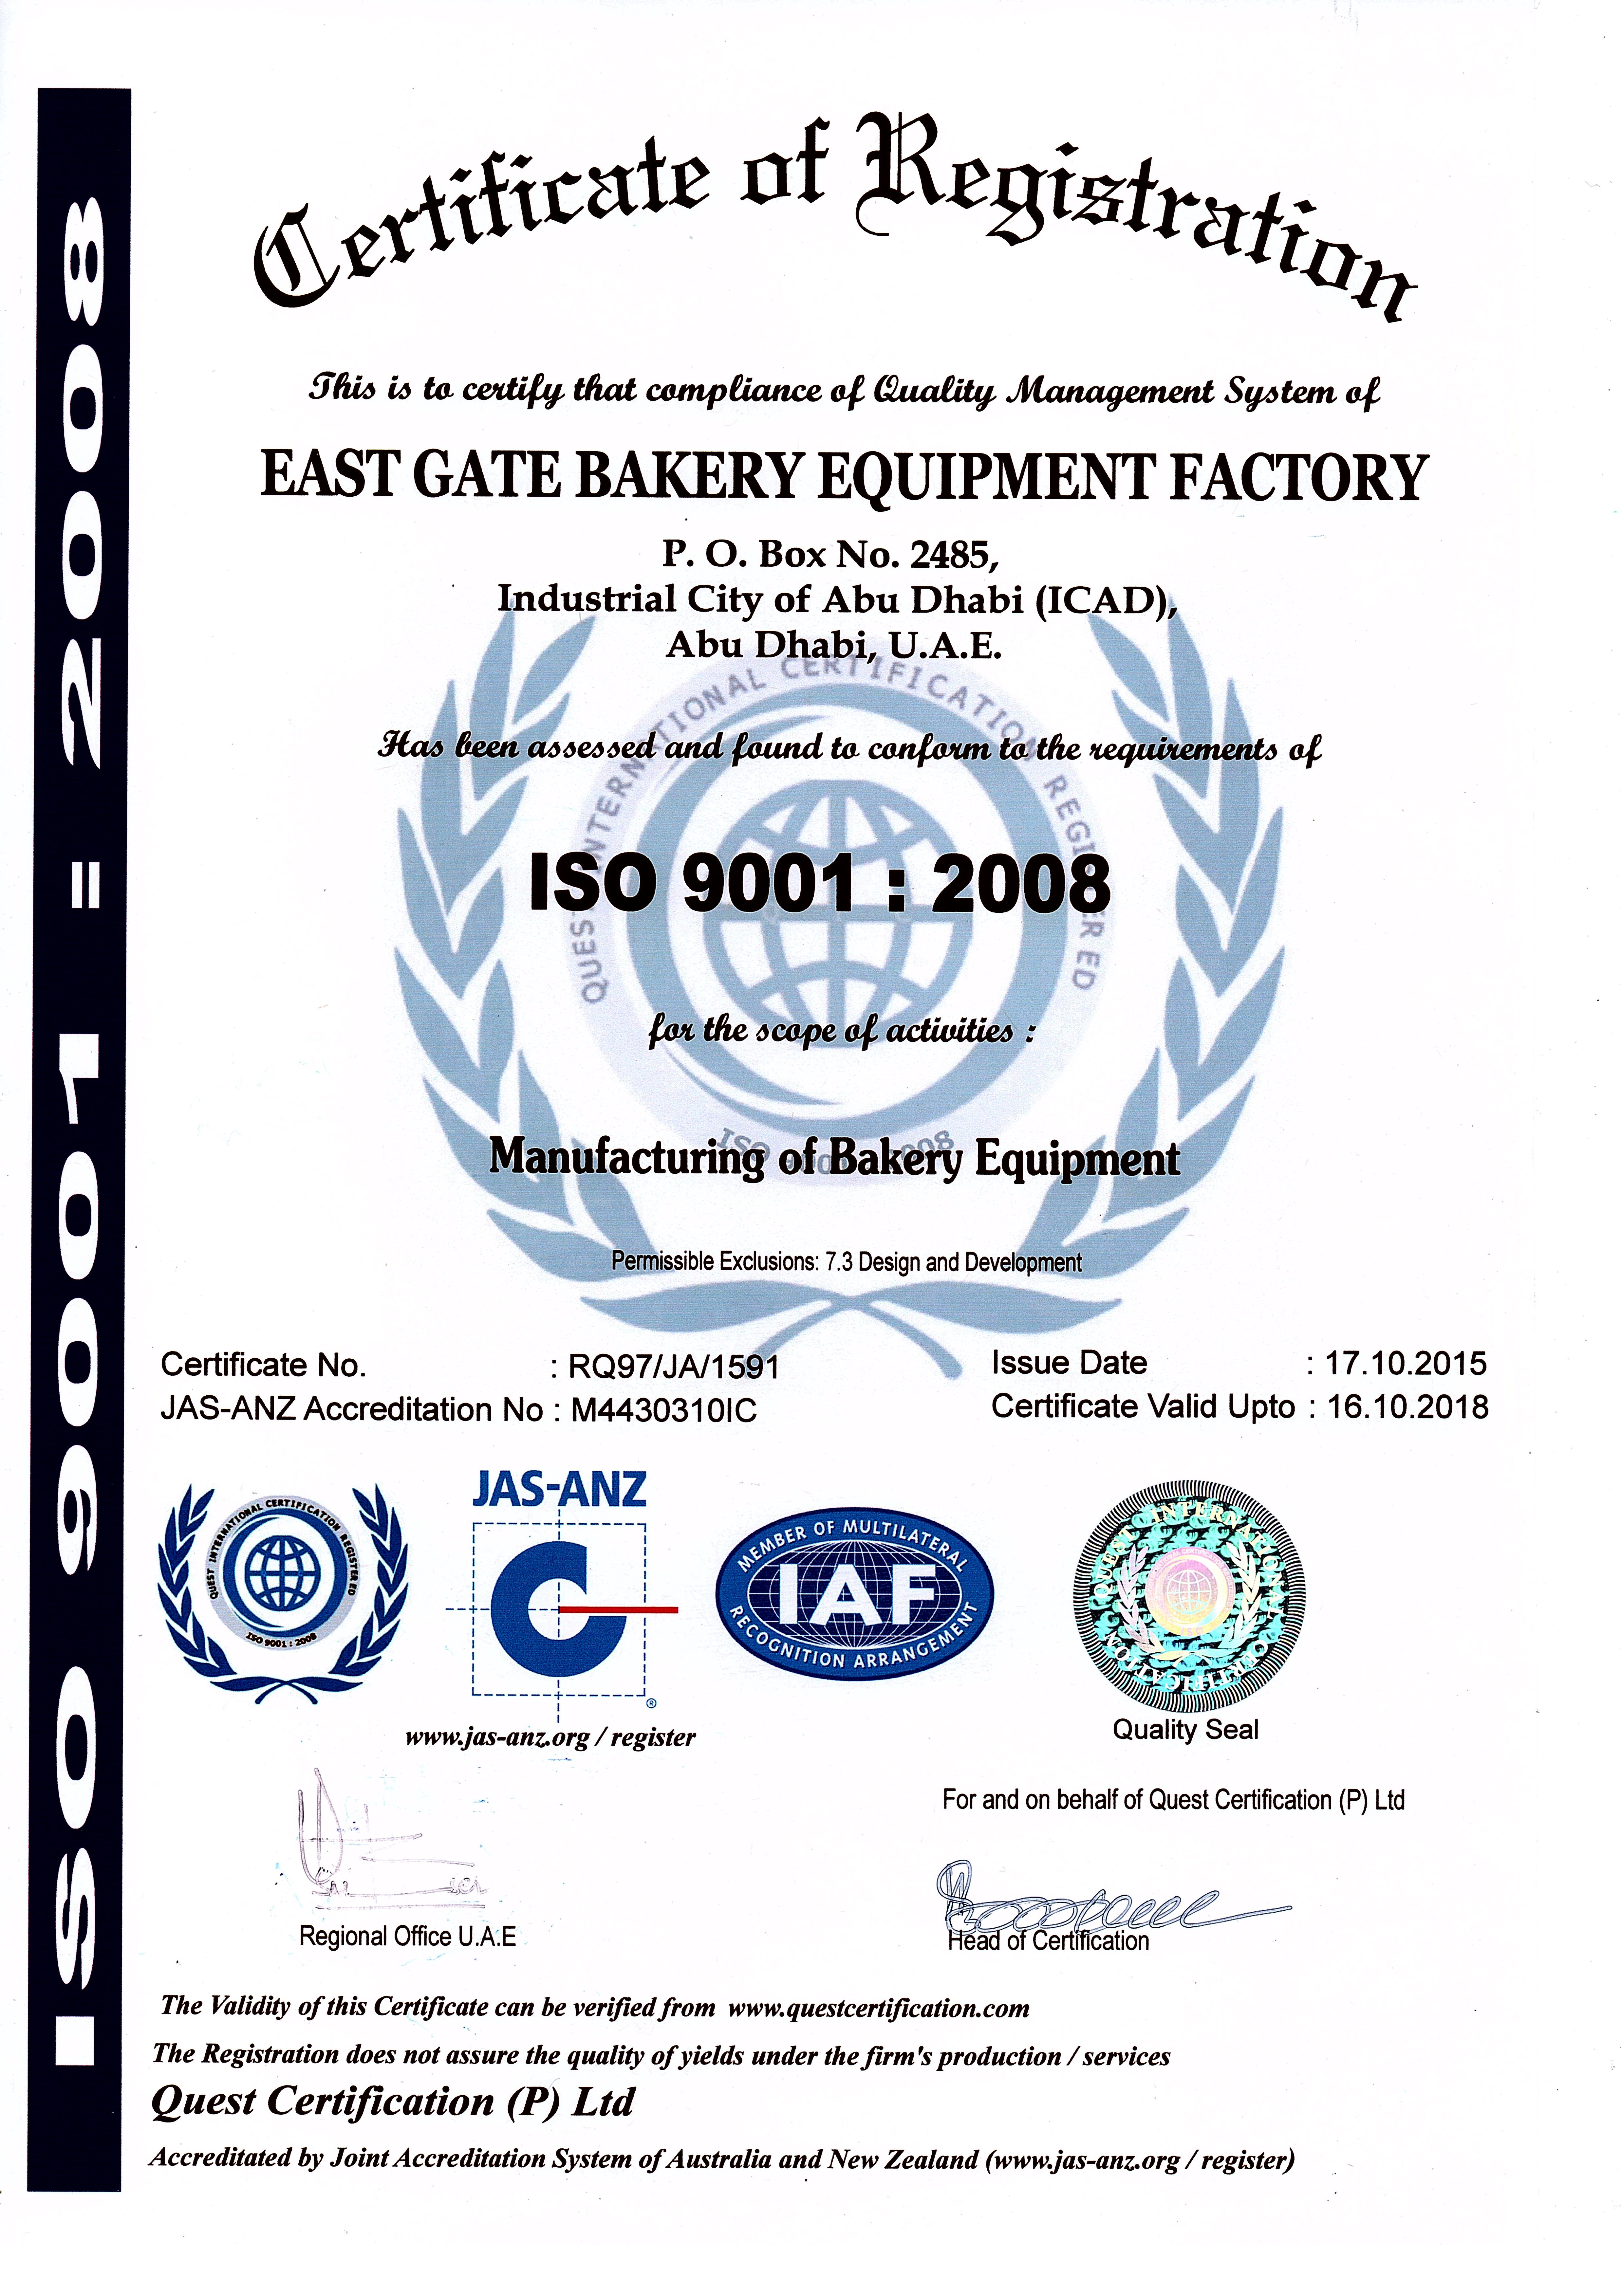 ISO 9001-2008 East Gate Bakery Equipment Factory